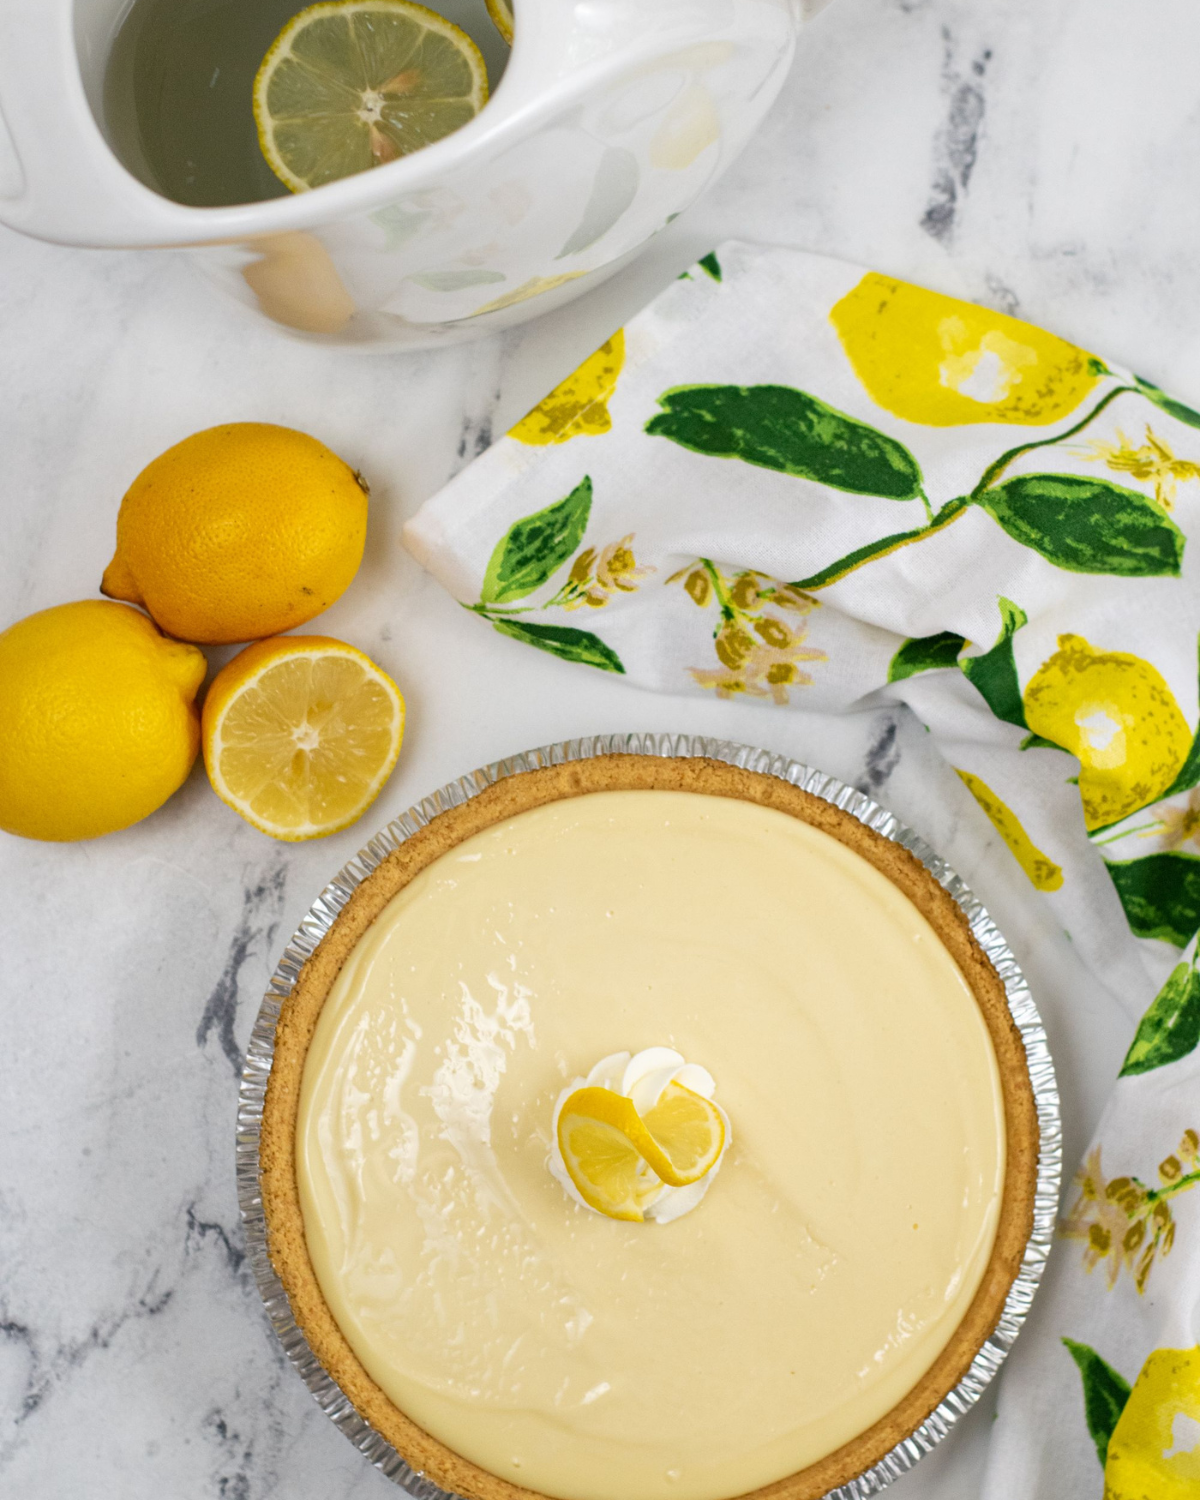 A Lemon Icebox Pie with a creamy topping and lemon slice garnish, accompanied by fresh lemons and a tea setting.